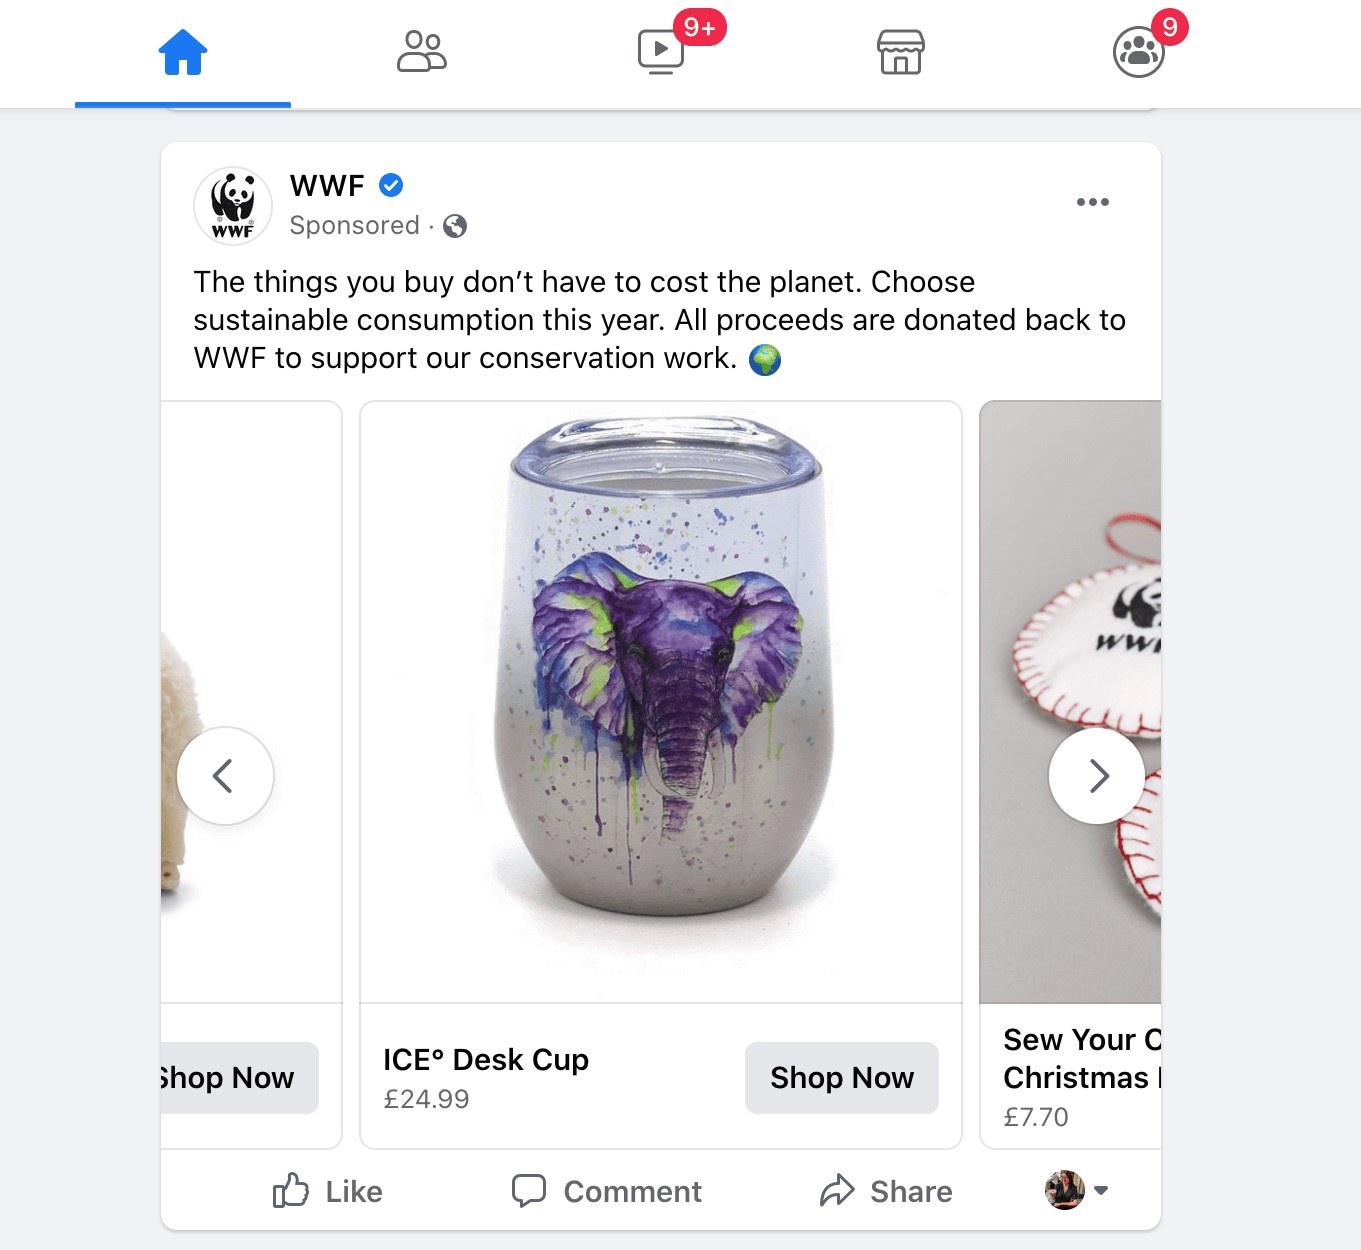 A carousel Facebook advertisement. 